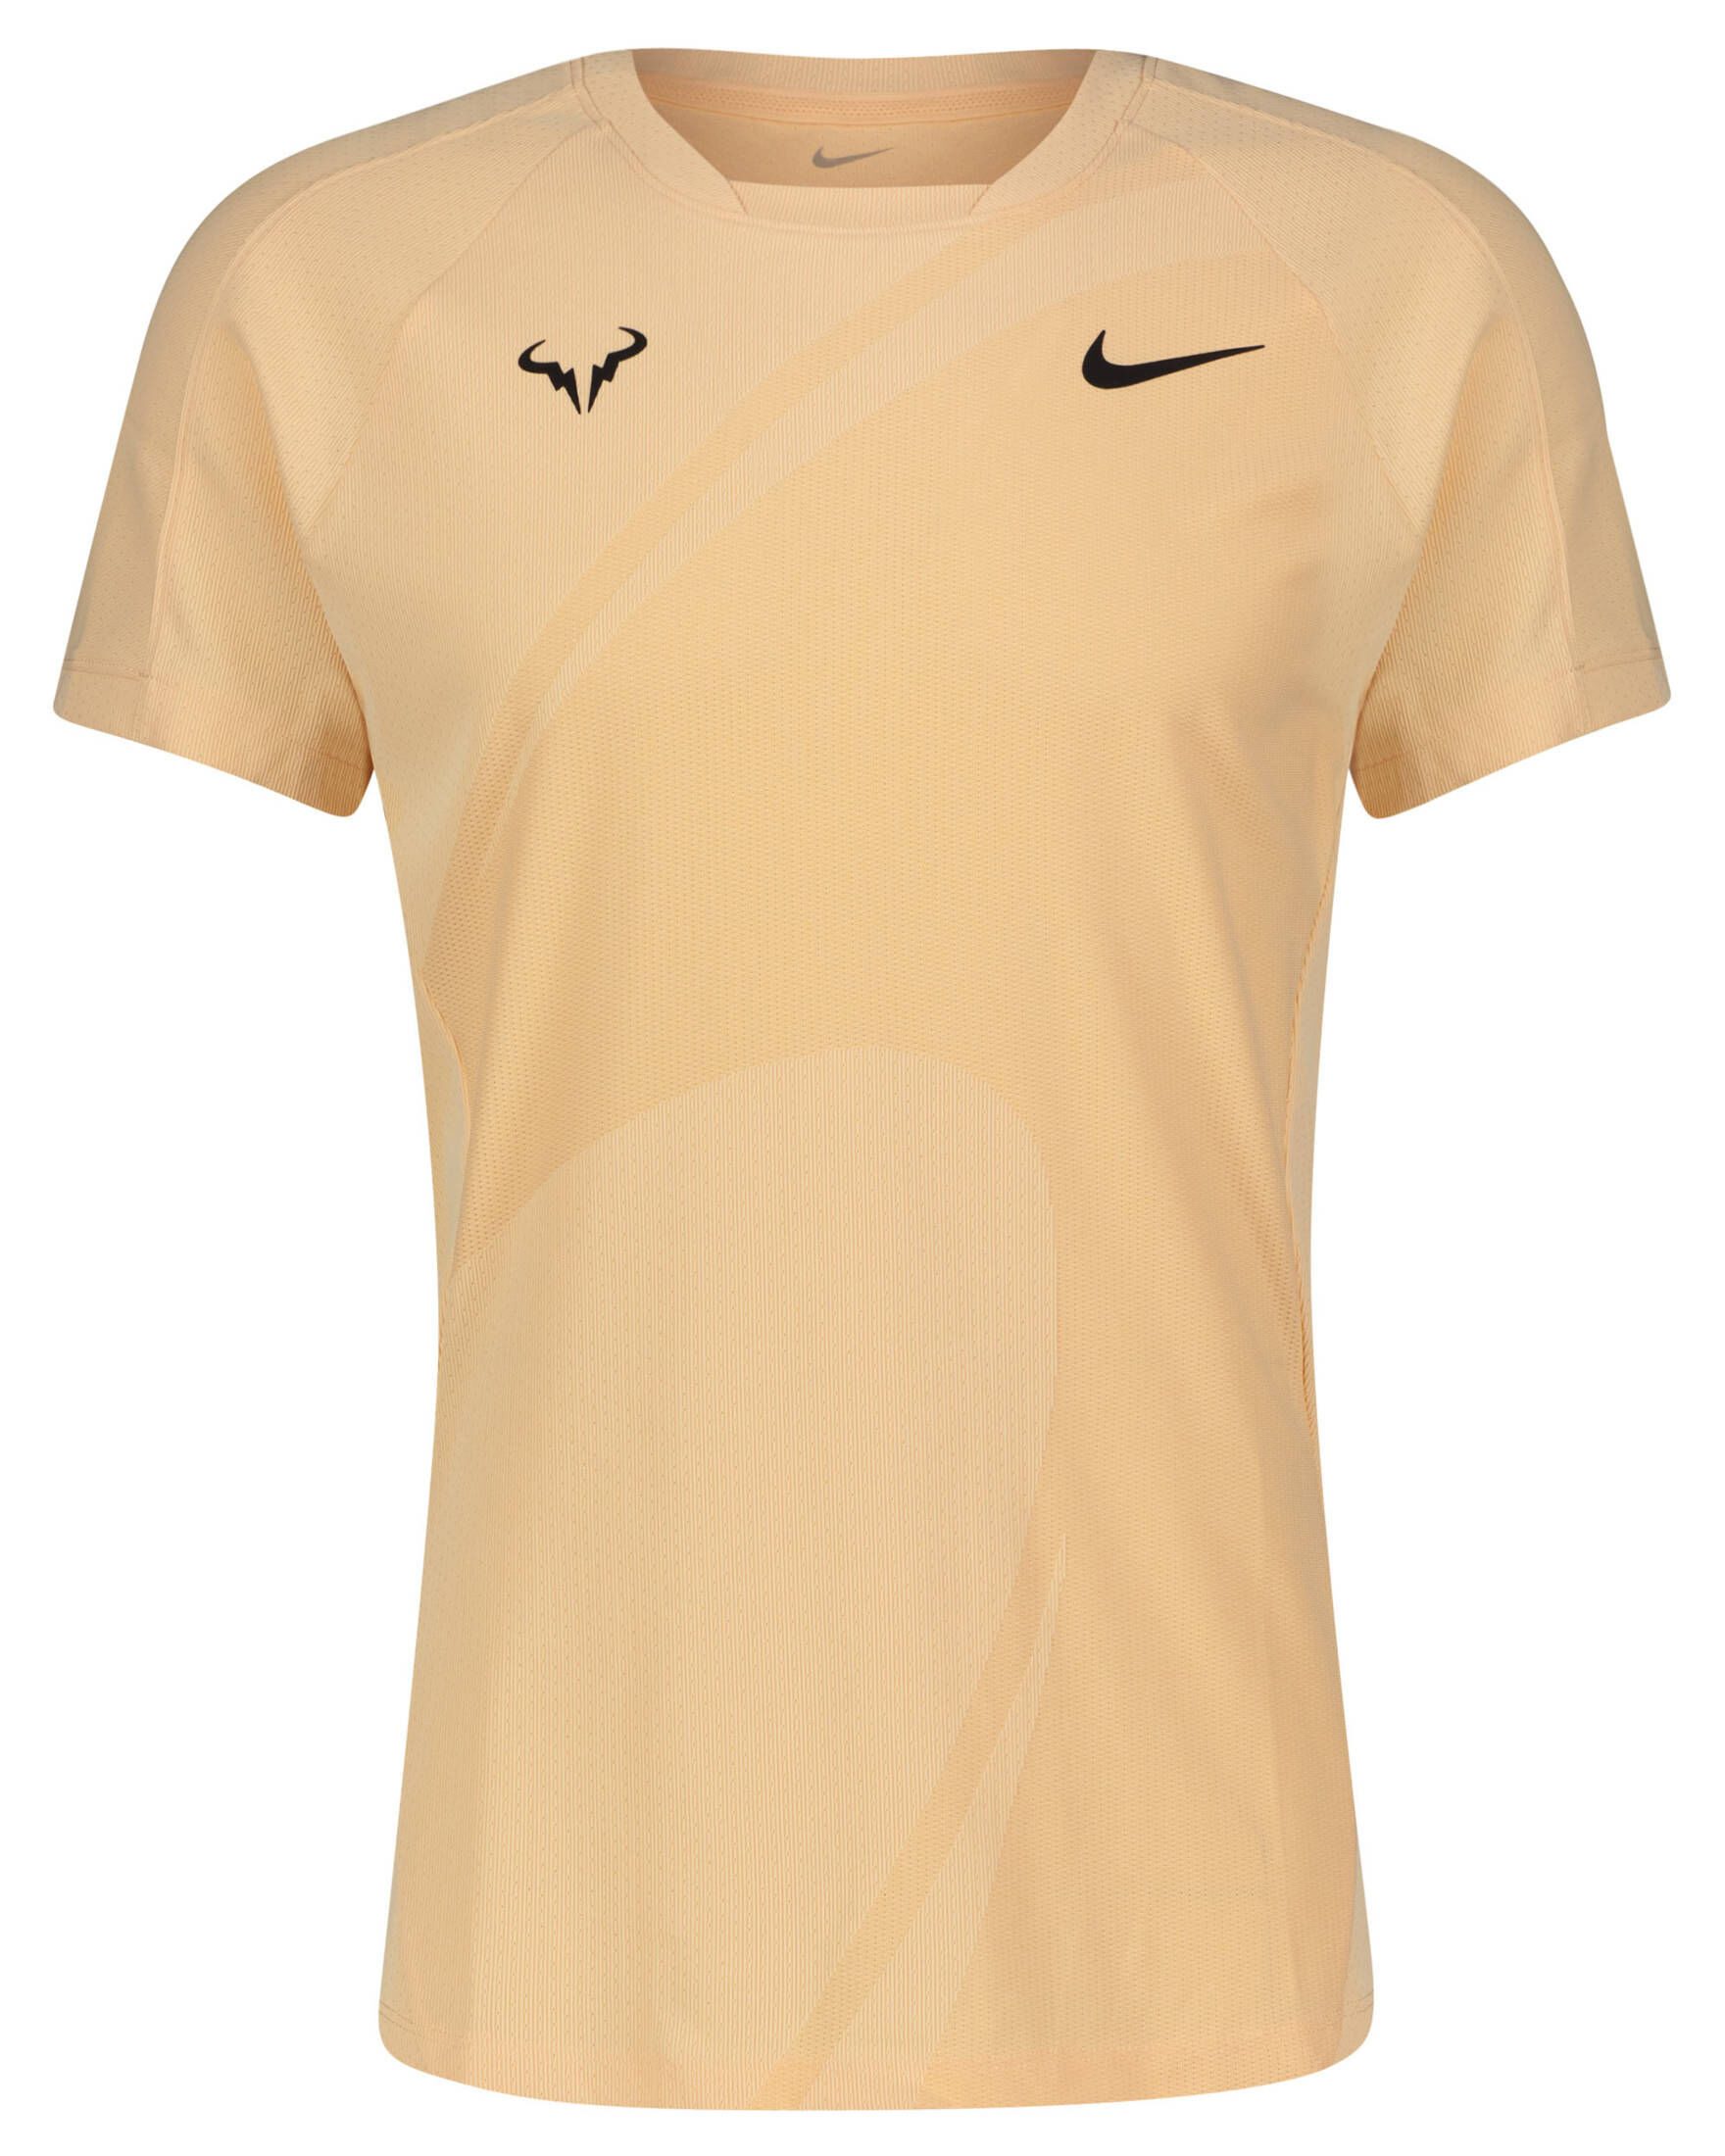 Nike Tennisshirt Herren Tennis-Shirt DRI FIT ADV RAFA